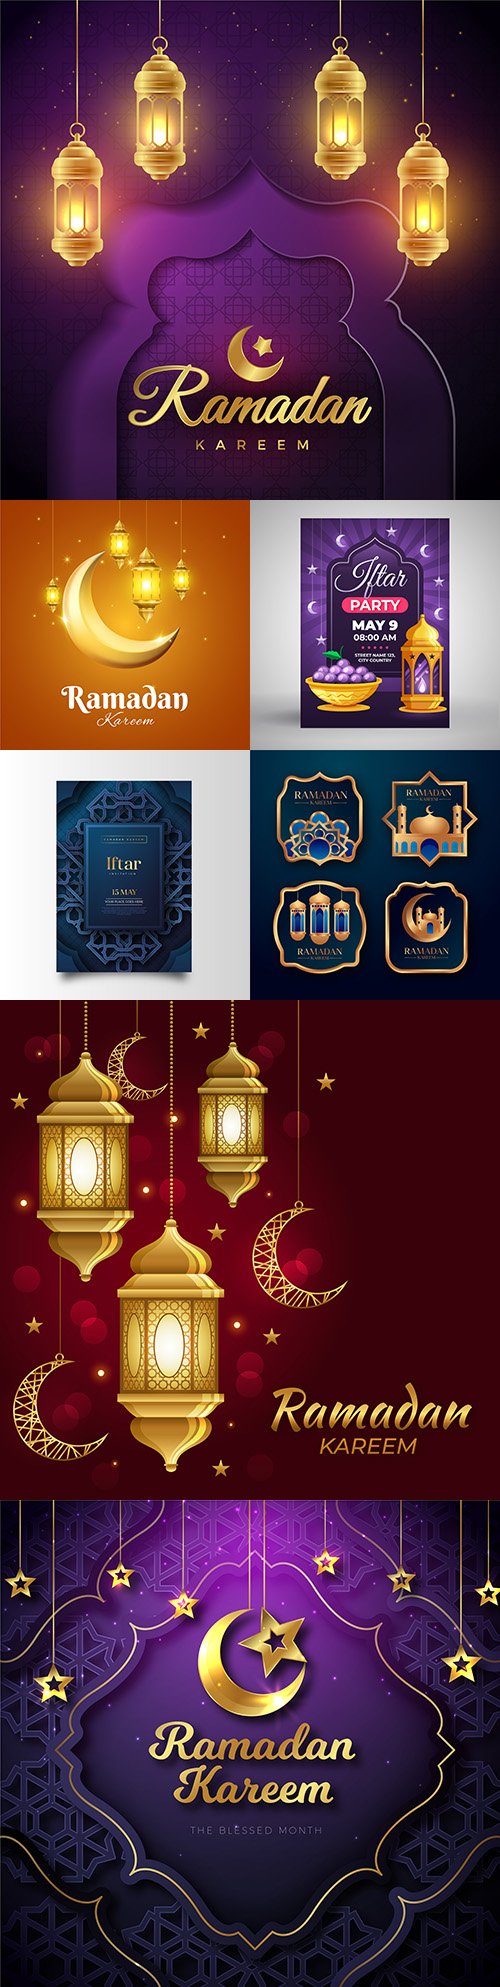 Ramadan Kareem Islamic background elements 22